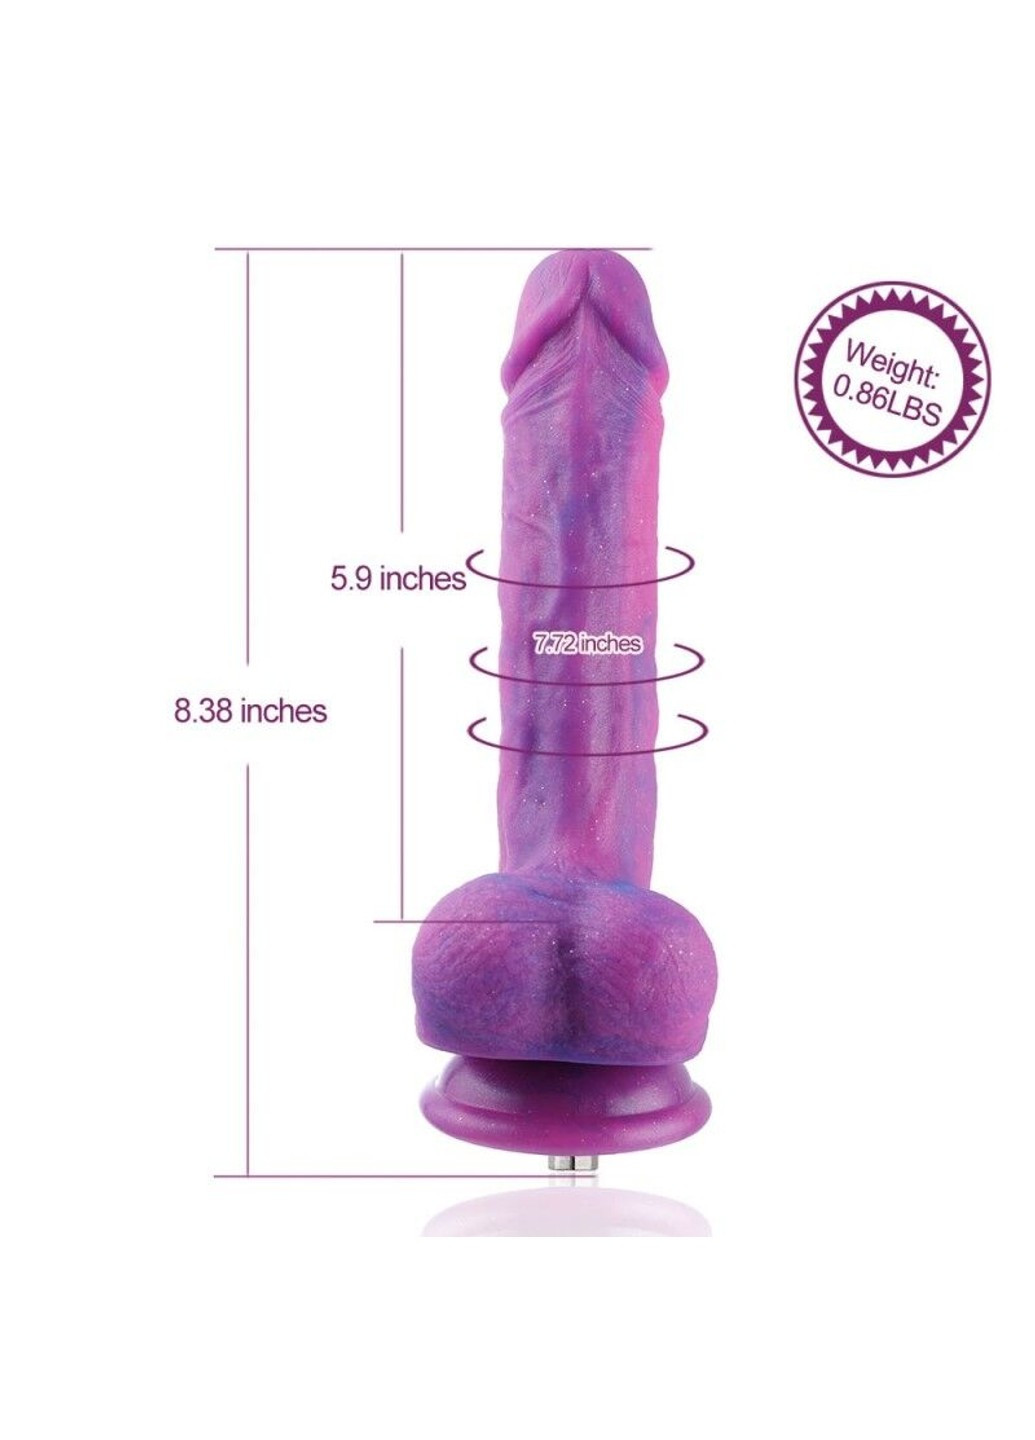 Фаллоимитатор 8.2″ с вибрацией для секс-машин Purple Silicone Dildo with Vibe, KlicLok Hismith (269698368)